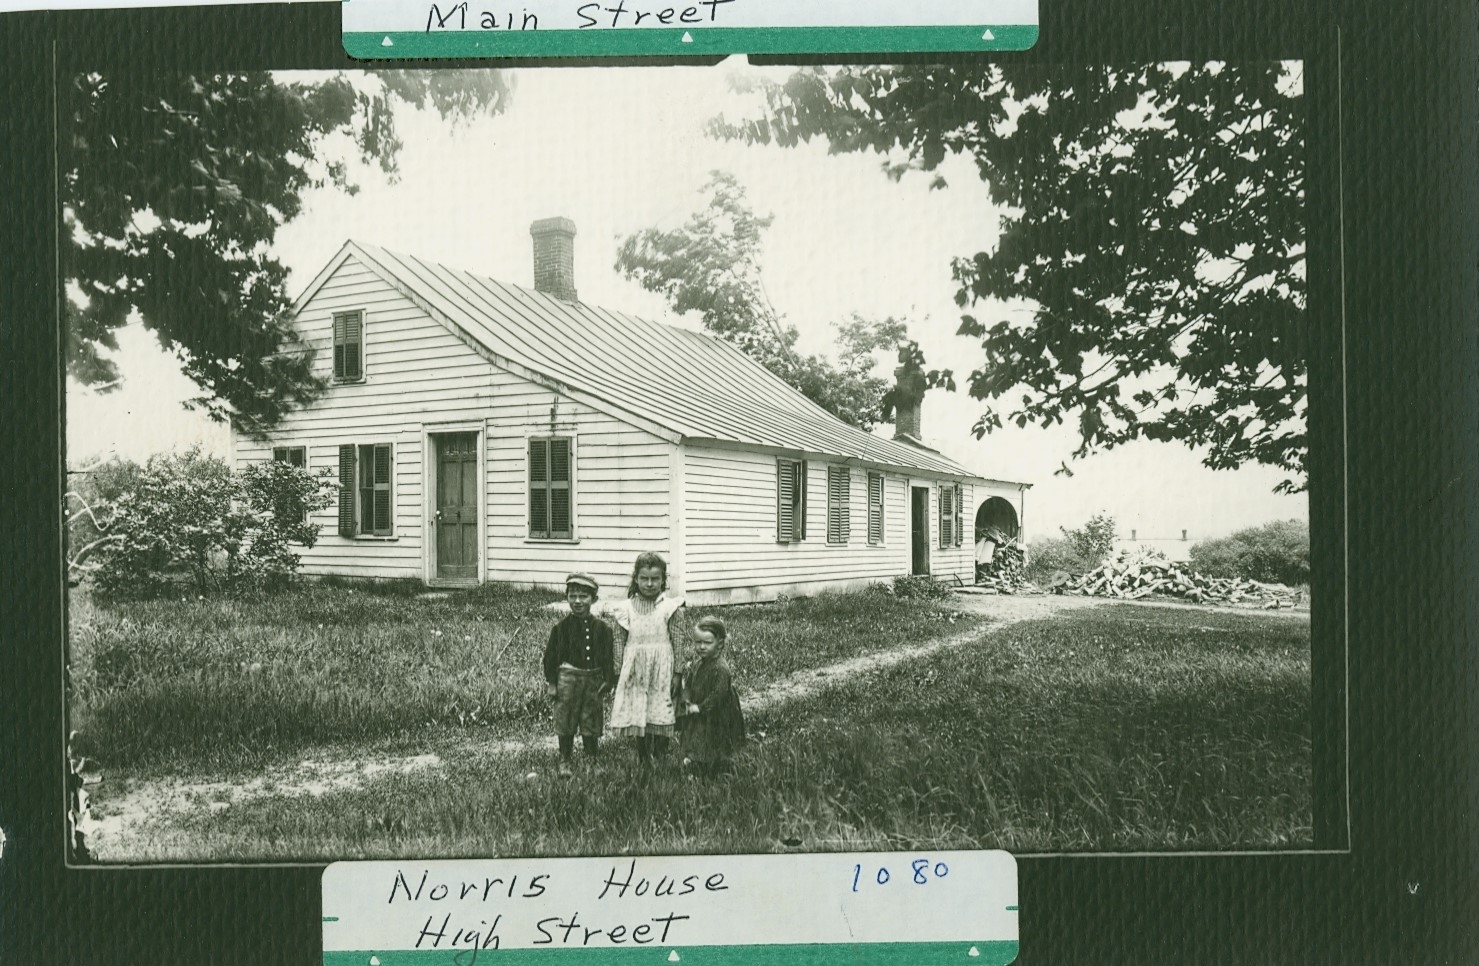 Norris House, 1080 High Street